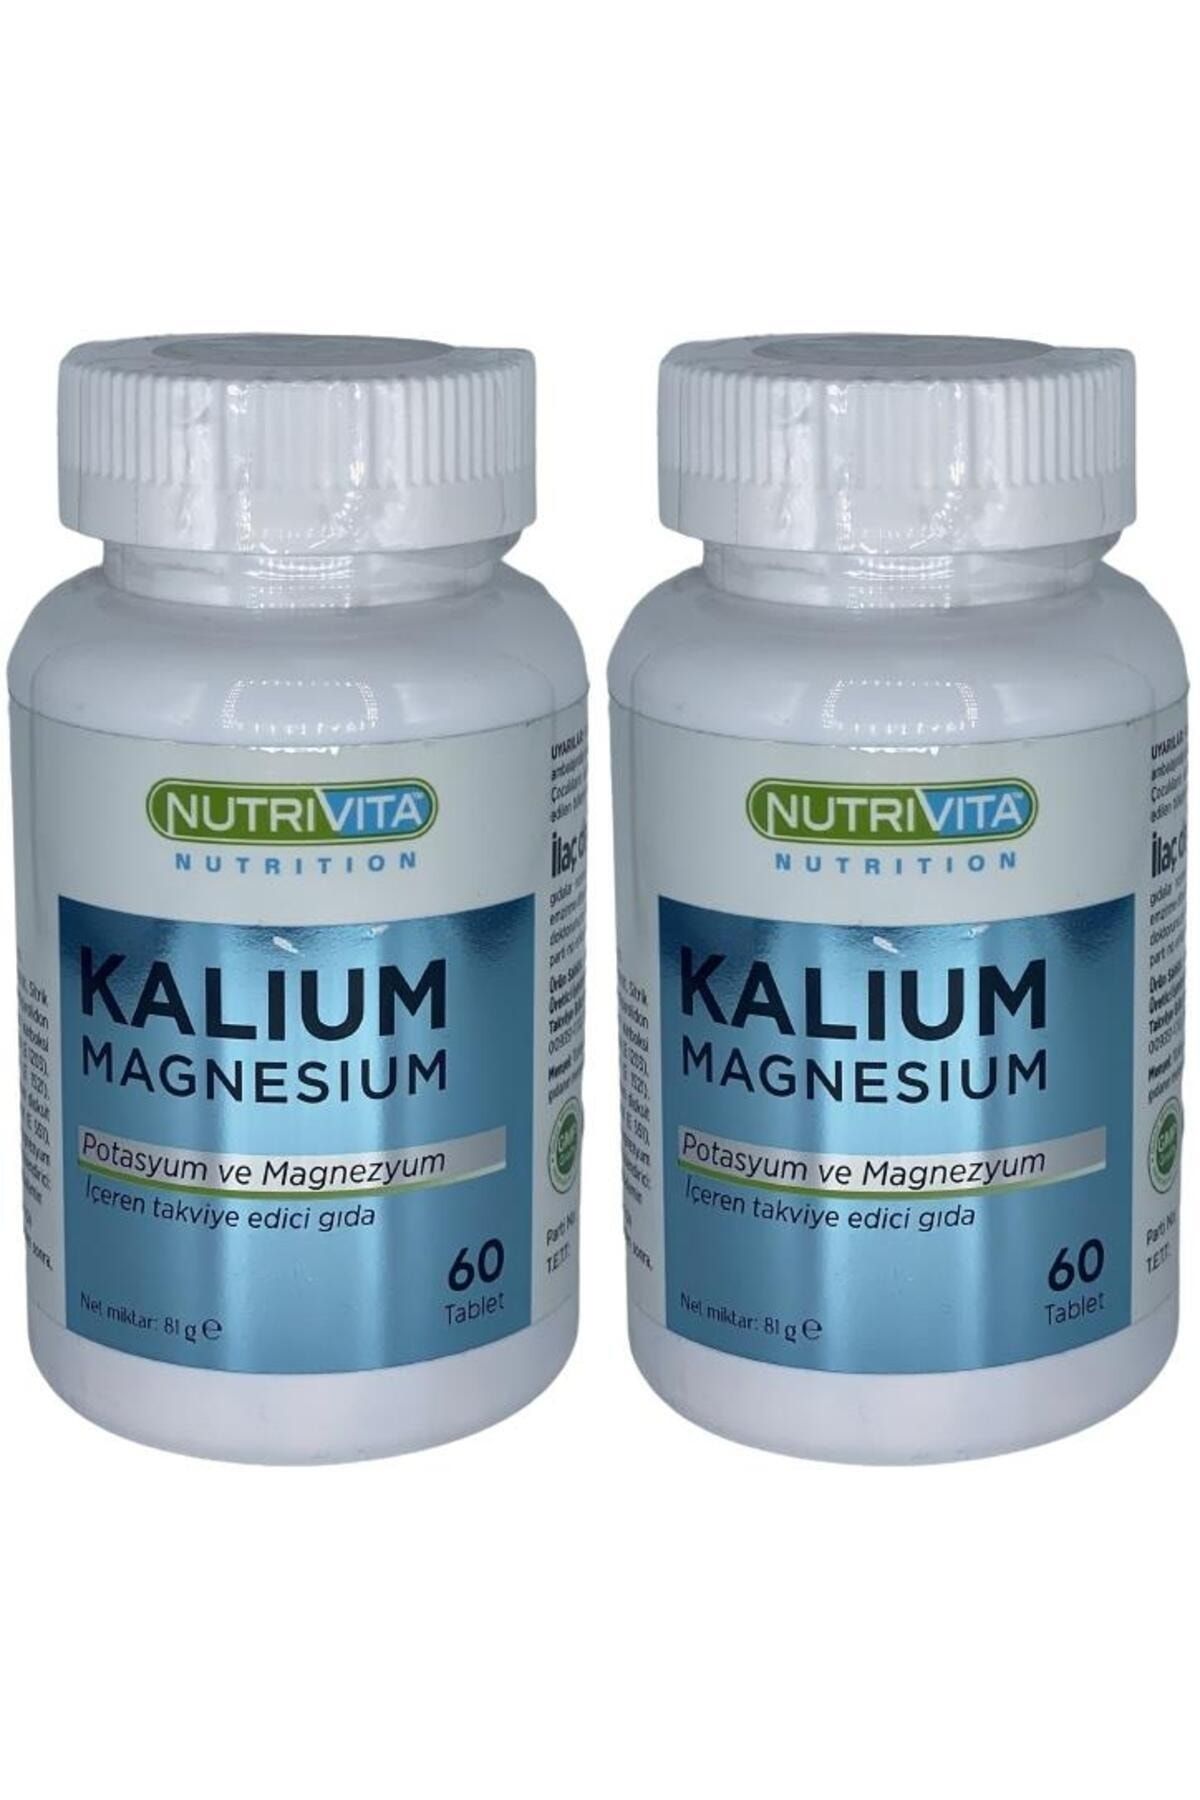 Nutrivita Nutrition Kalium Magnesium 2x60 Tablet Potasyum Magnezyum Çinko Demir Vitamin B6 B12 Iron